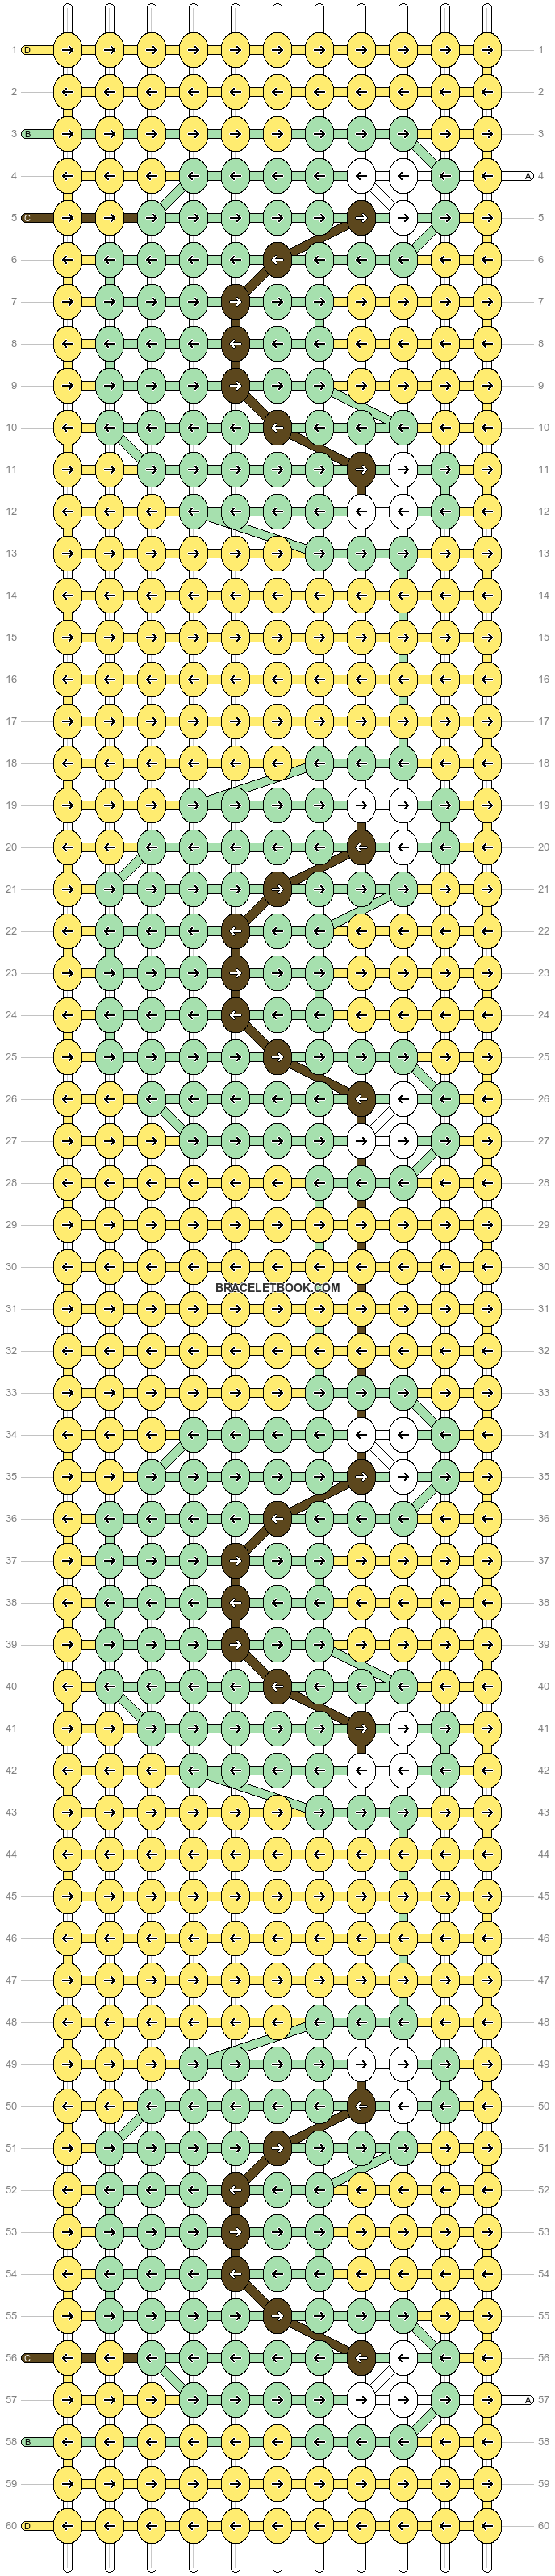 Alpha pattern #35928 variation #39783 pattern